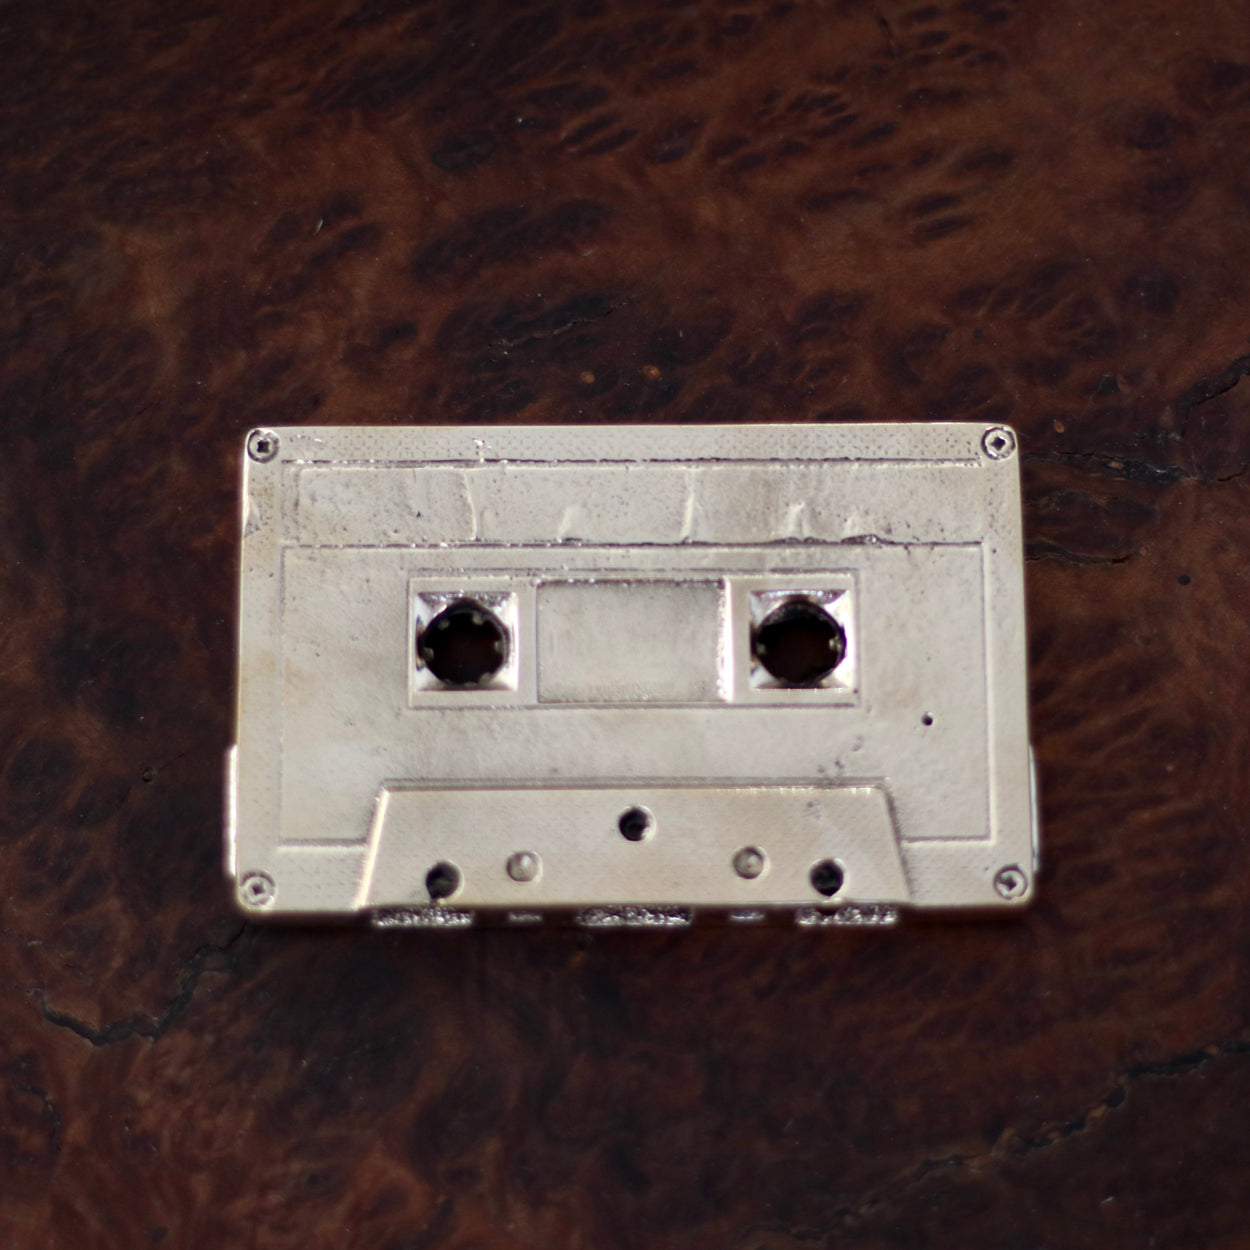 Bronze Cassette Mix Tape by Nancy Pearce on burl bench